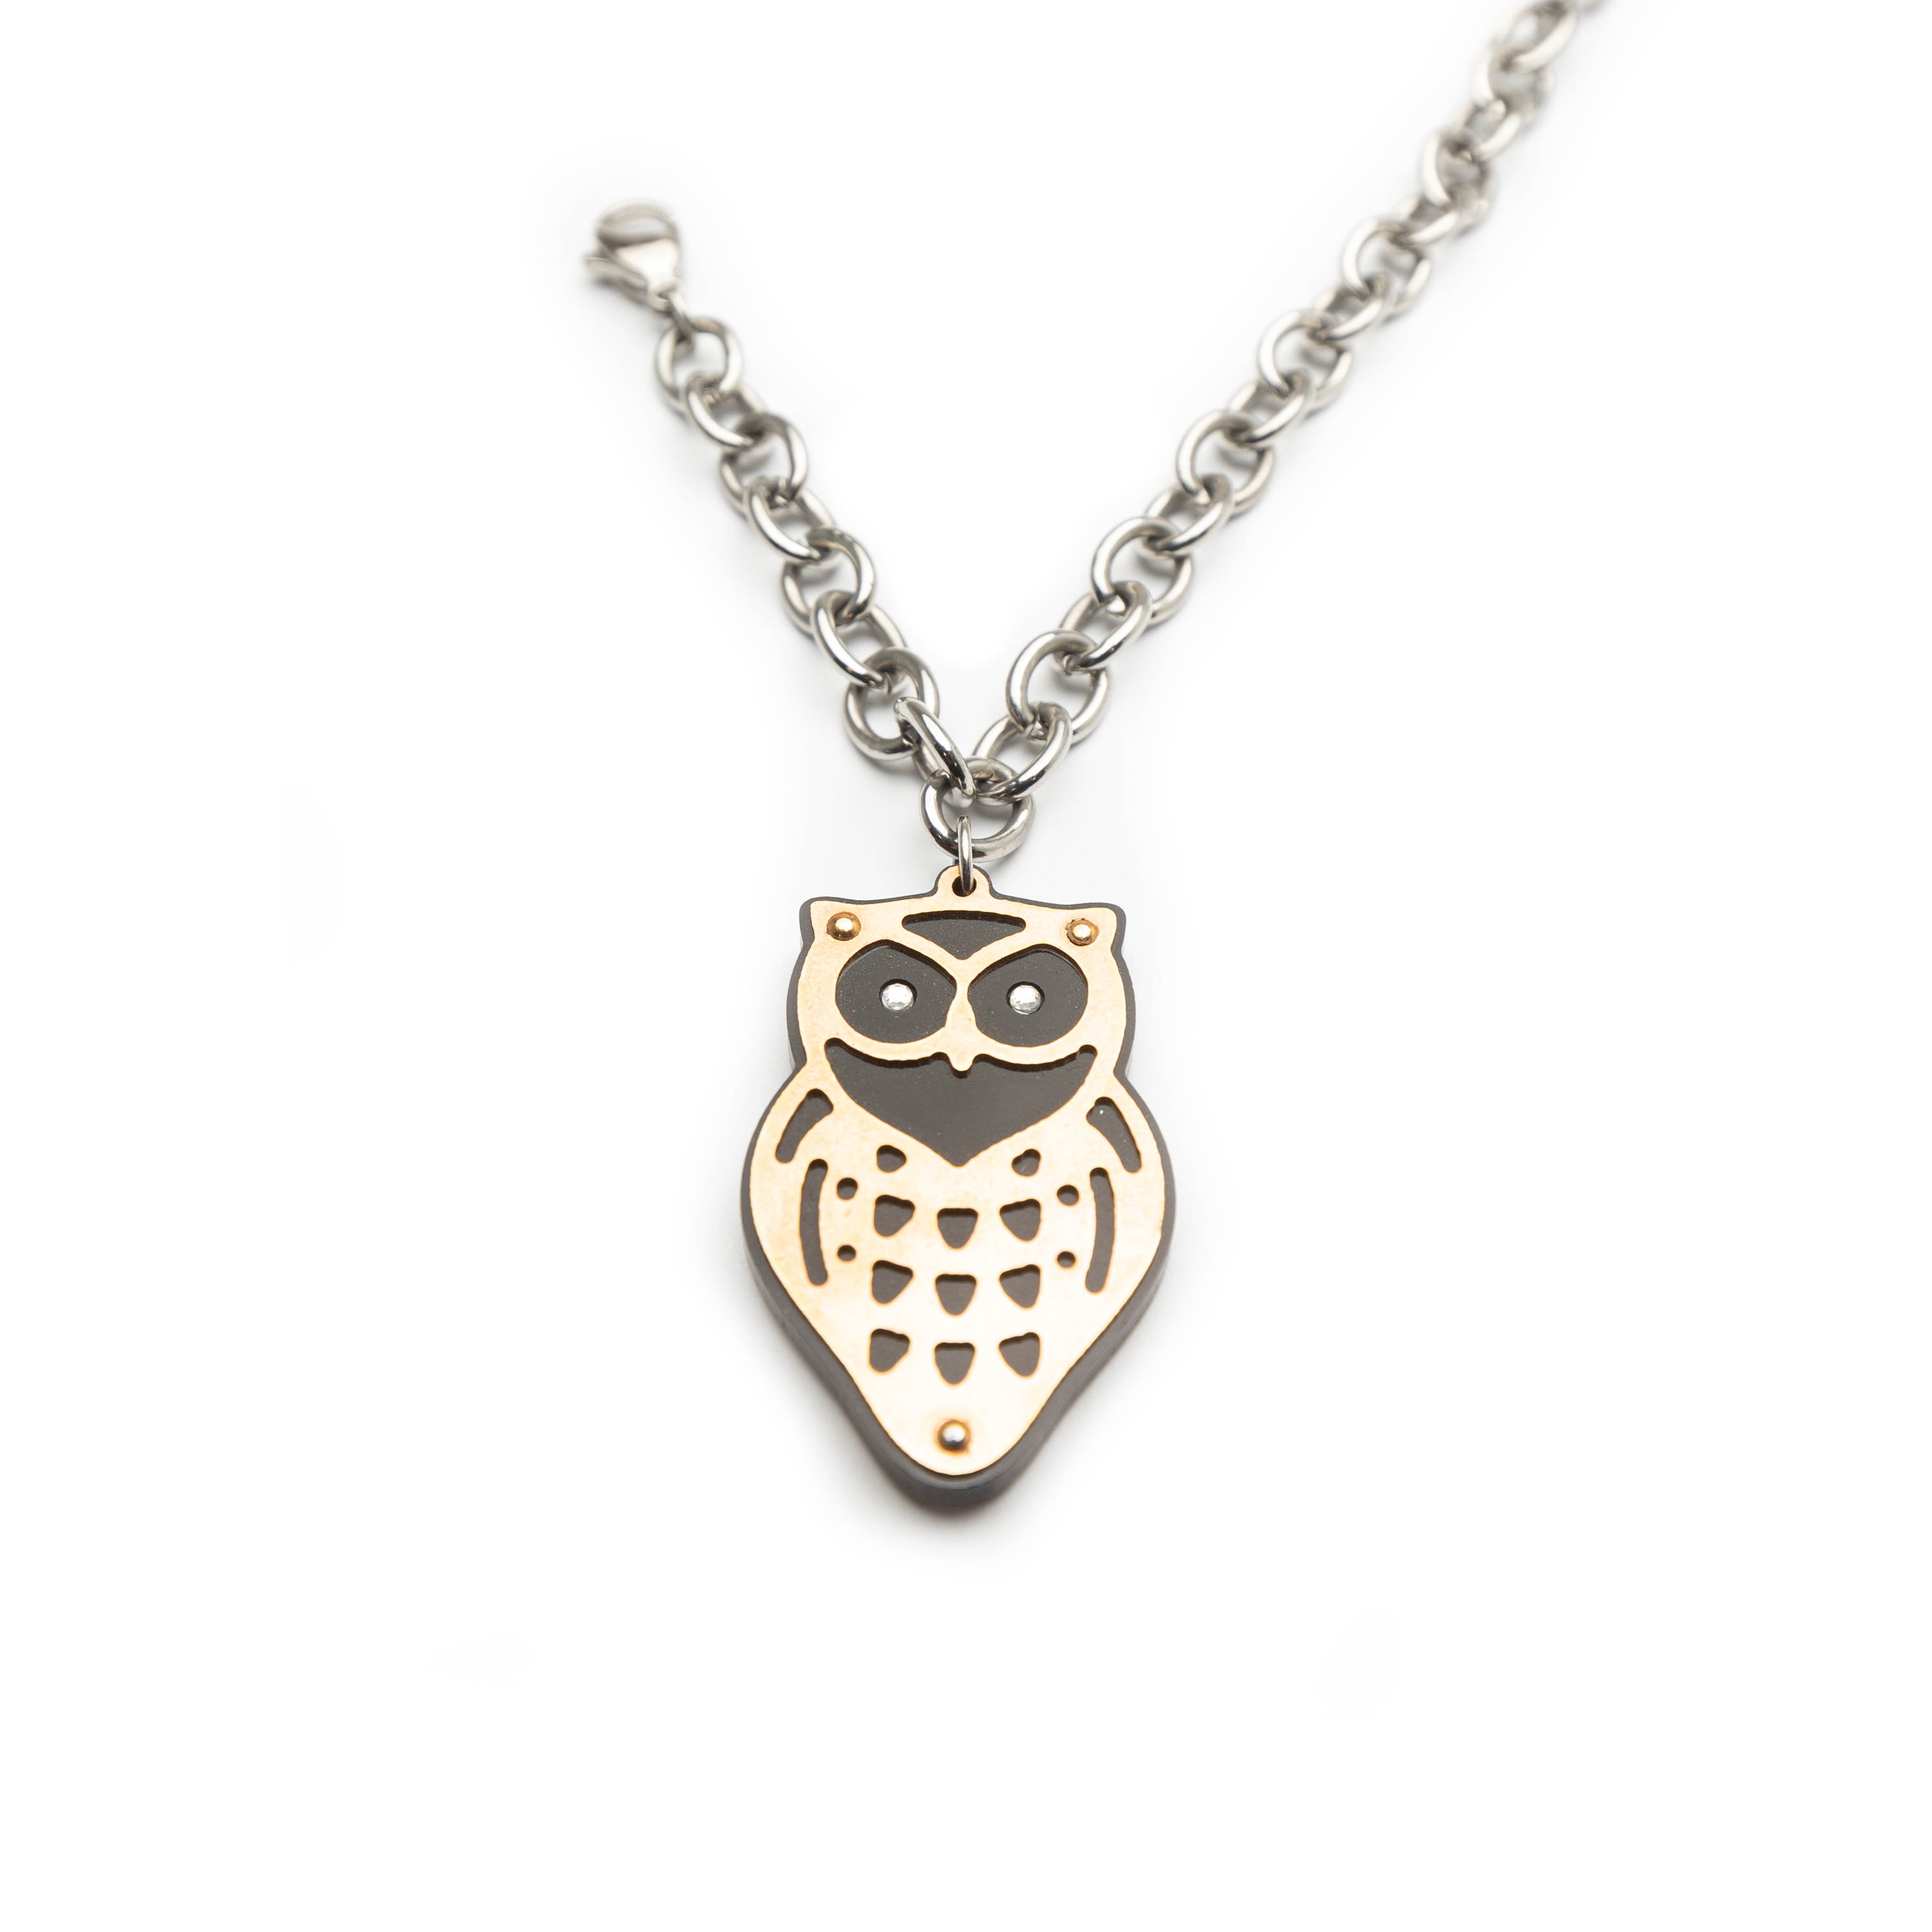 Ladies Steel Bracelet Set With Owl Pendant.